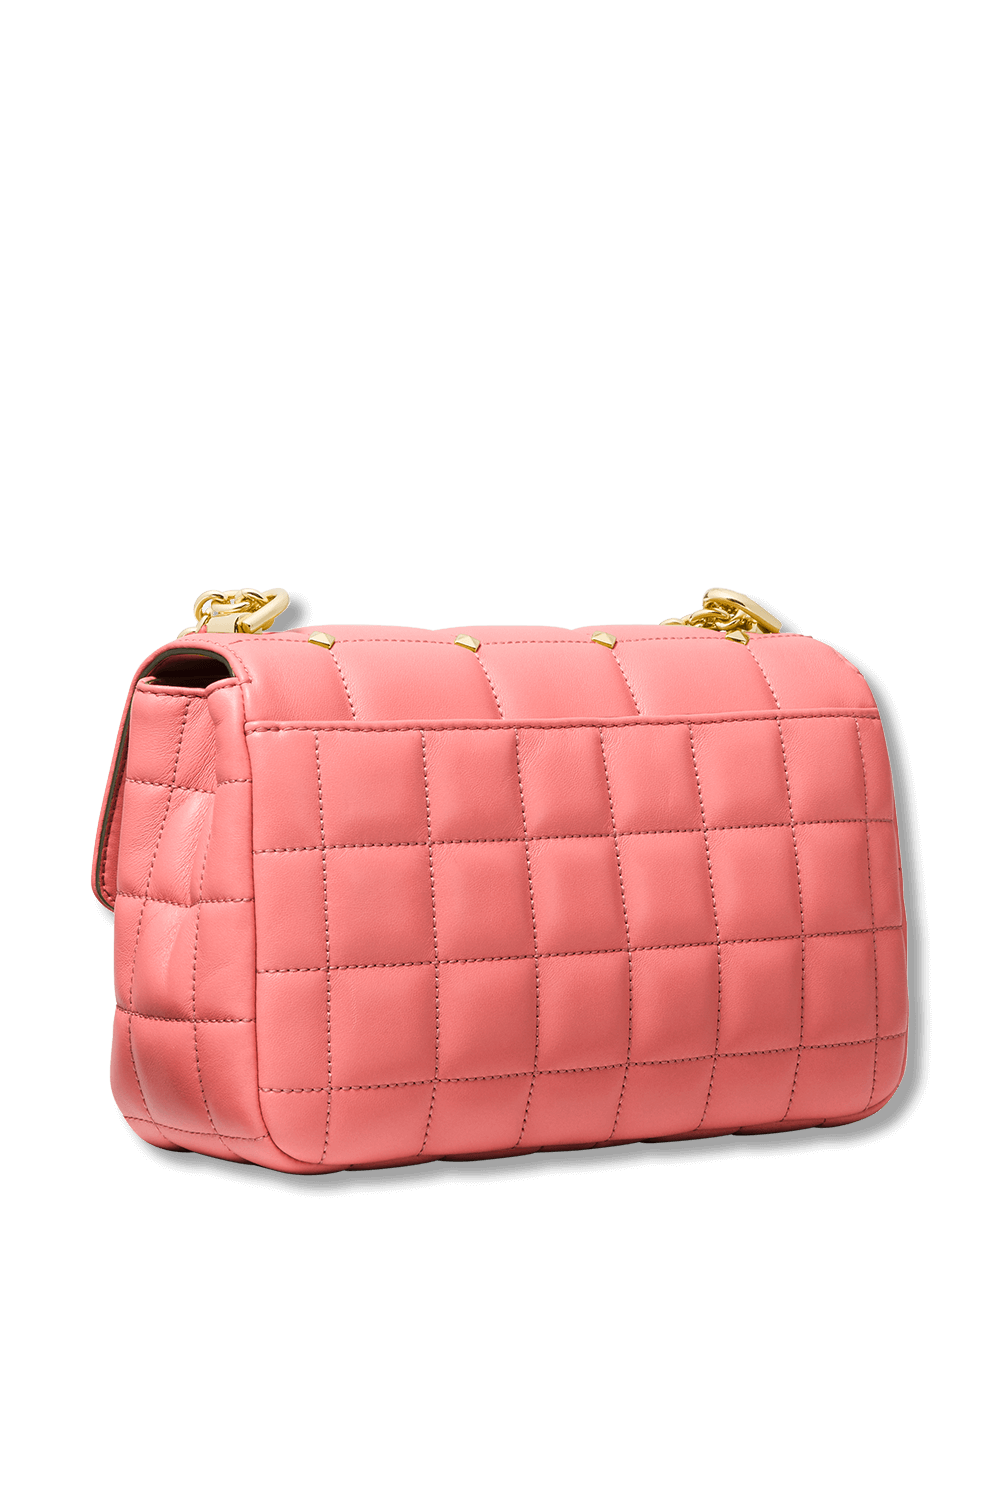 Soho Large Studded Quilted Leather Shoulder Bag In Pink MICHAEL KORS